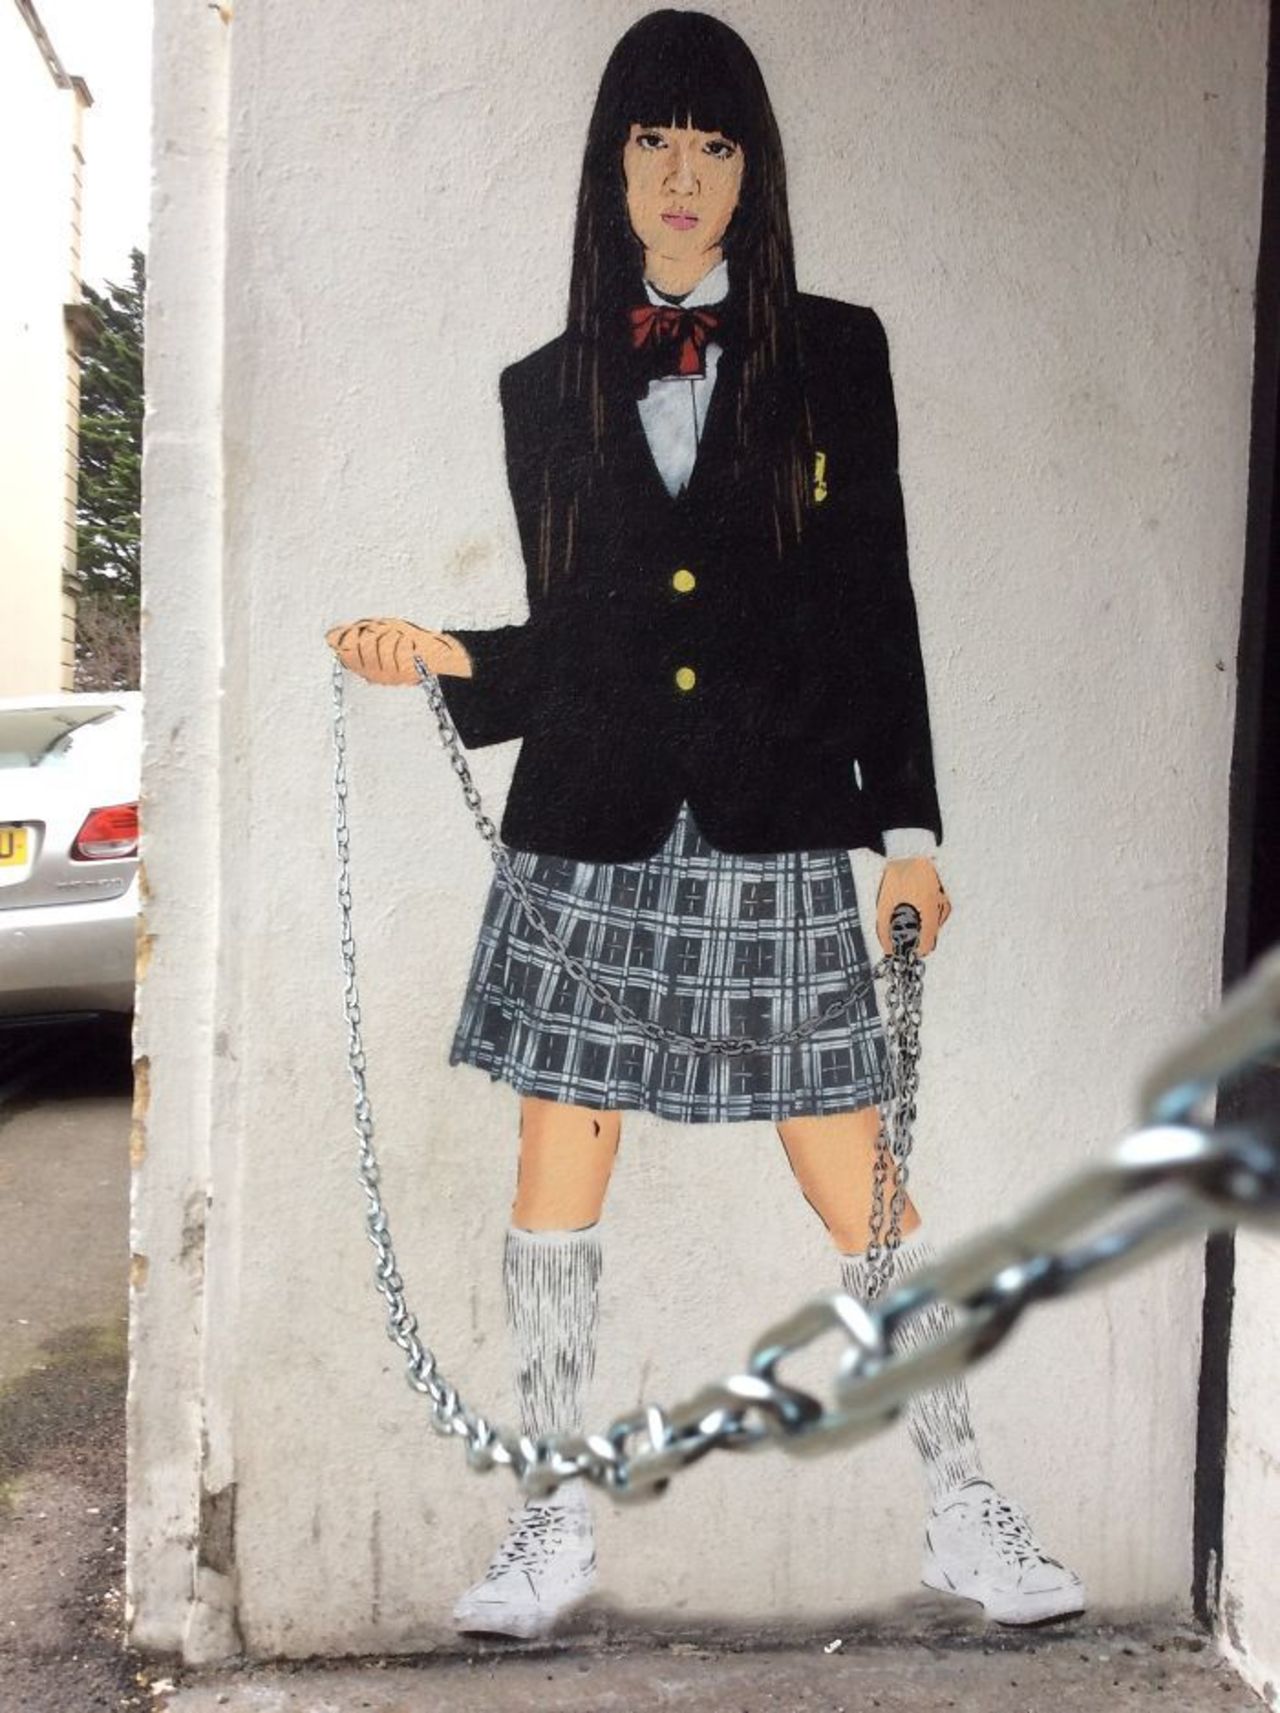 Clever Work by Bored Panda #KillBill #streetart #mural #graffiti #inktober https://t.co/OrJMXye3bG